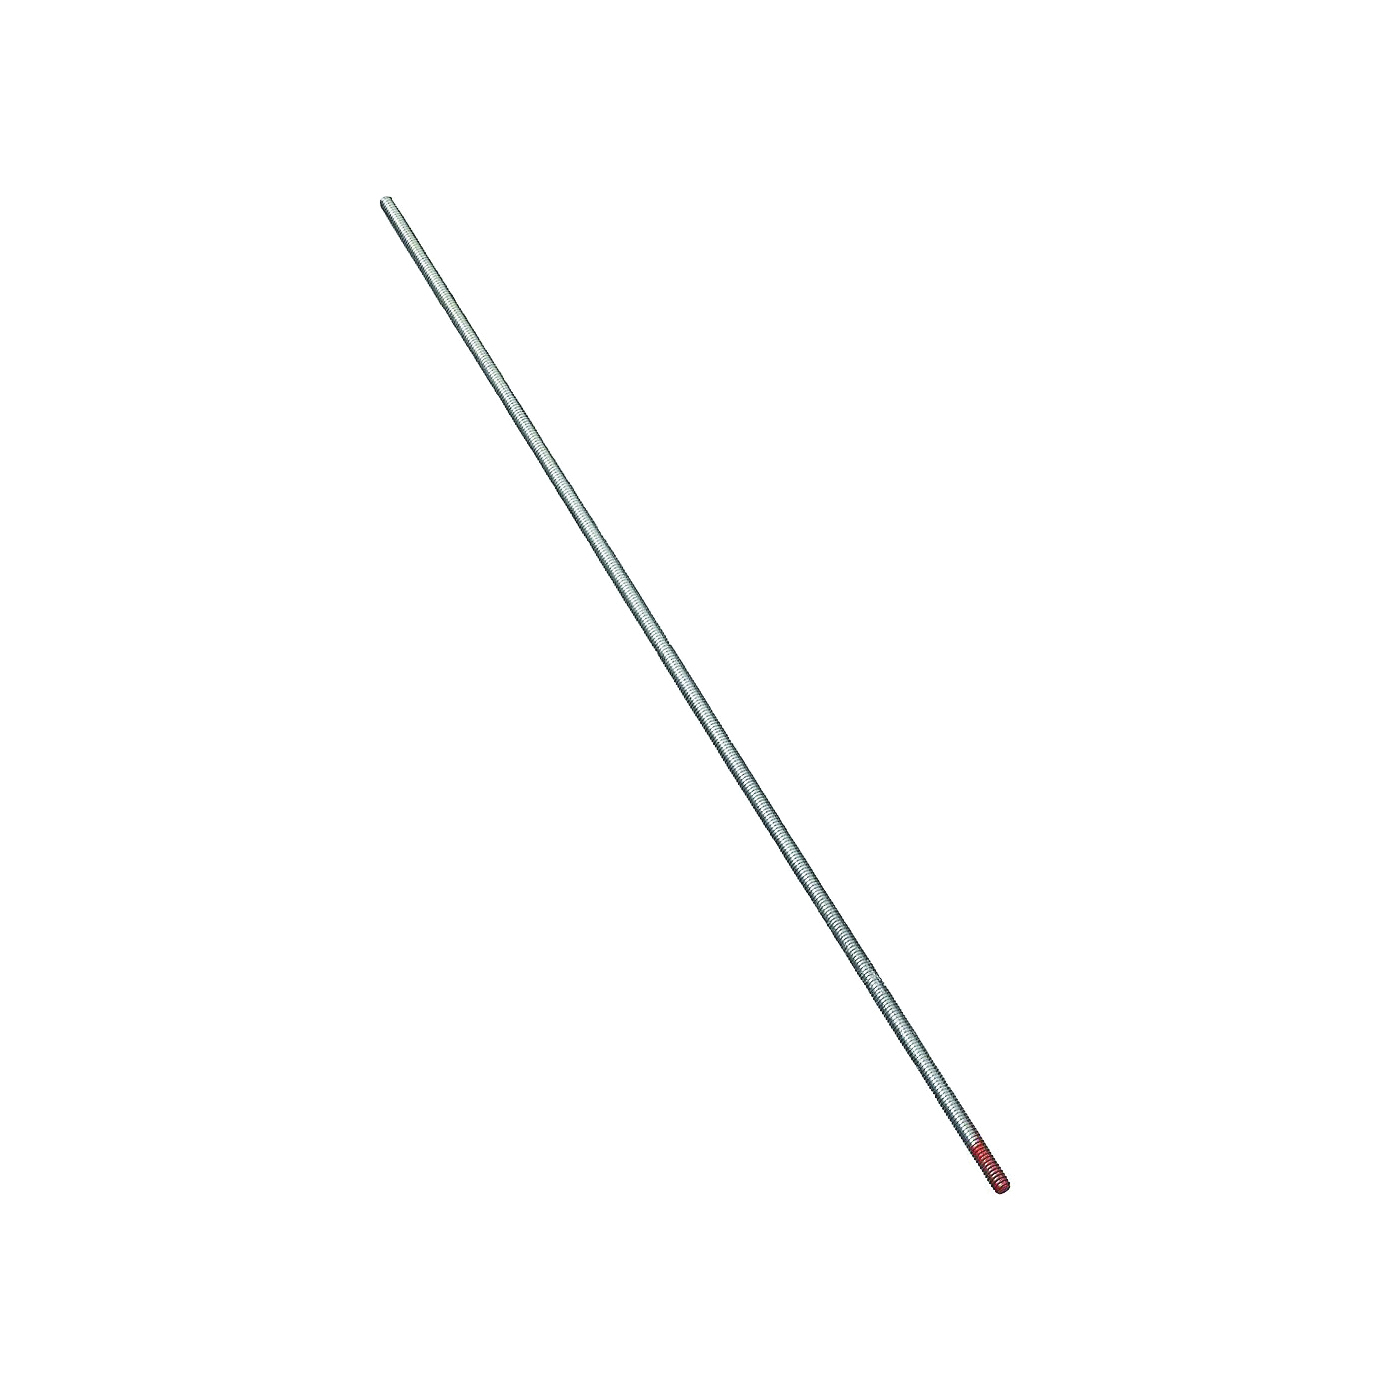 N179-291 Threaded Rod, #8-32 Thread, 12 in L, A Grade, Steel, Zinc, UNC Thread